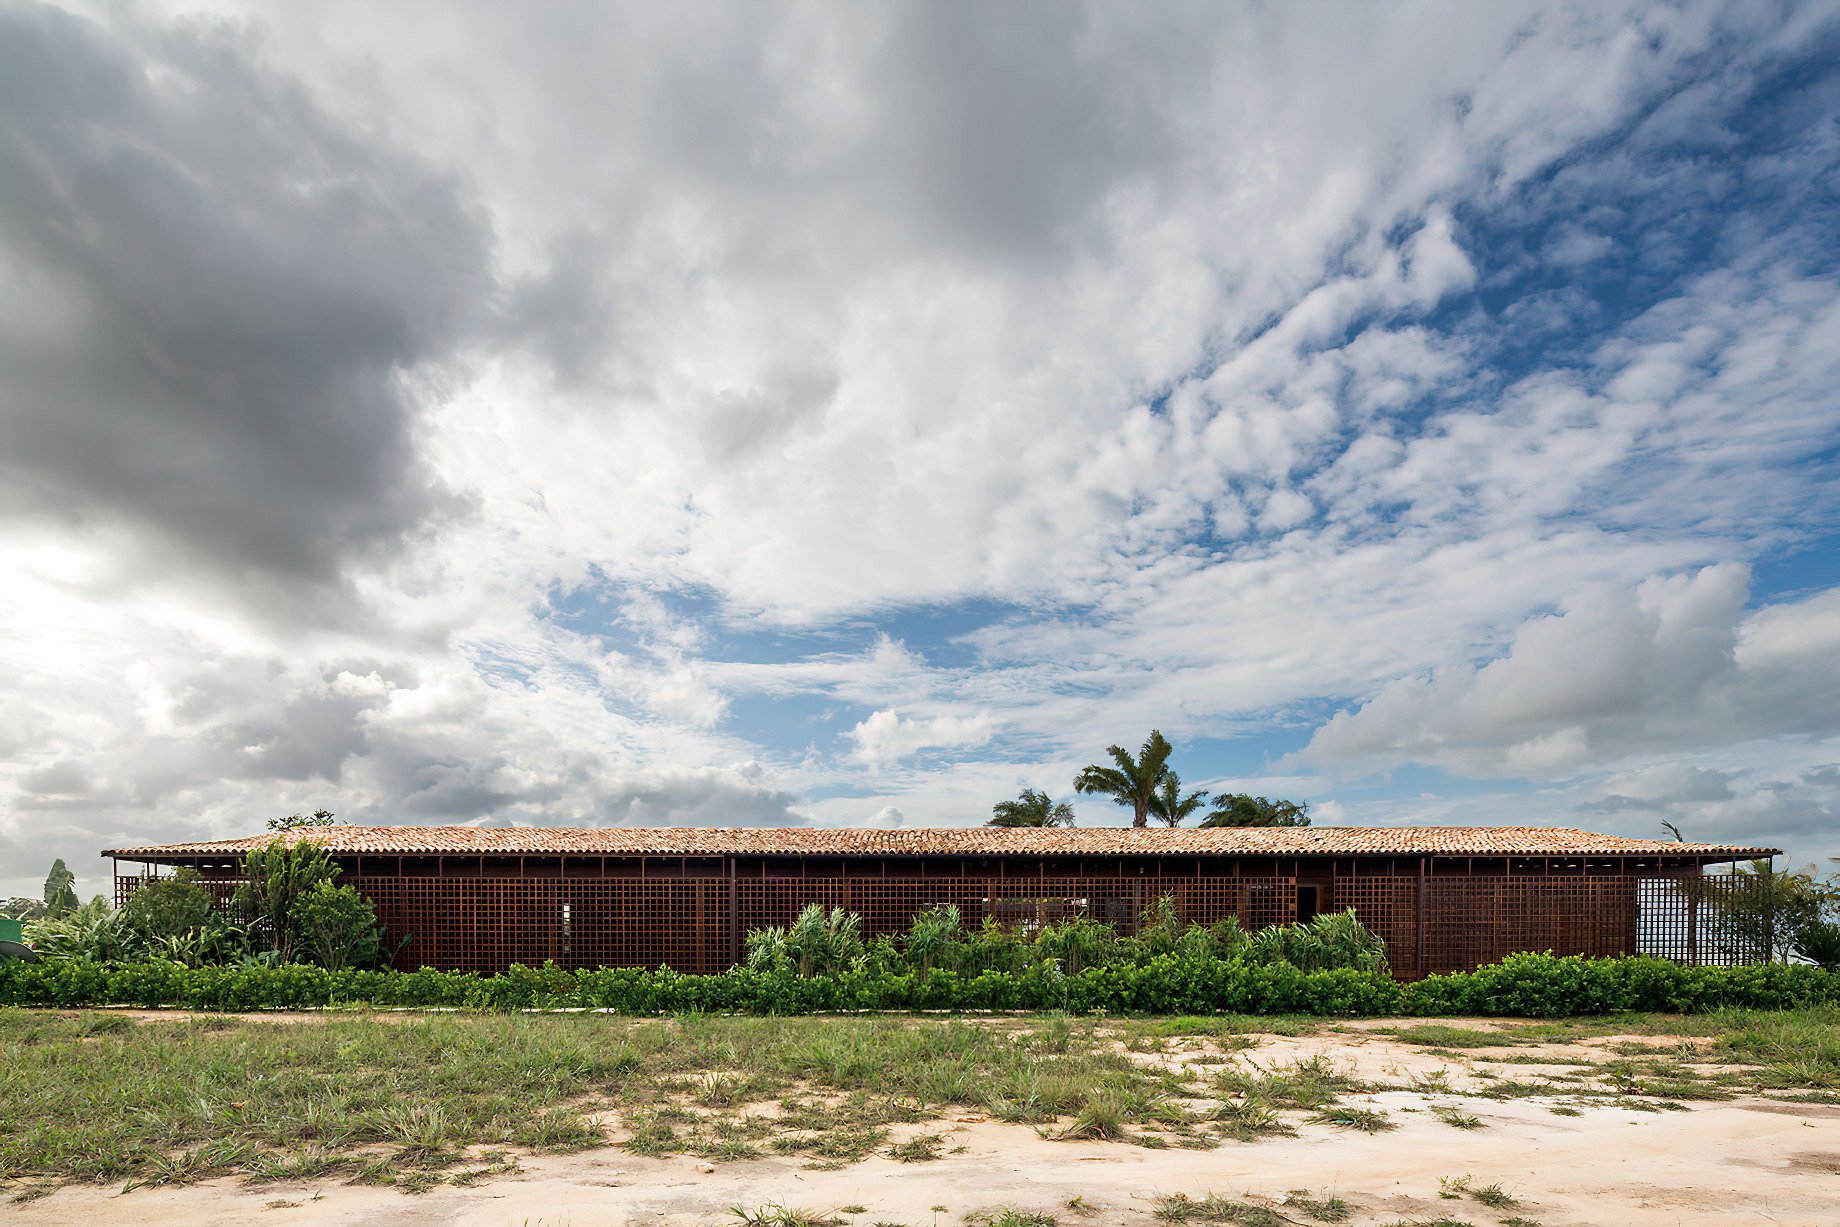 JCA House Summer Residence – Trancoso, Bahia, Brazil